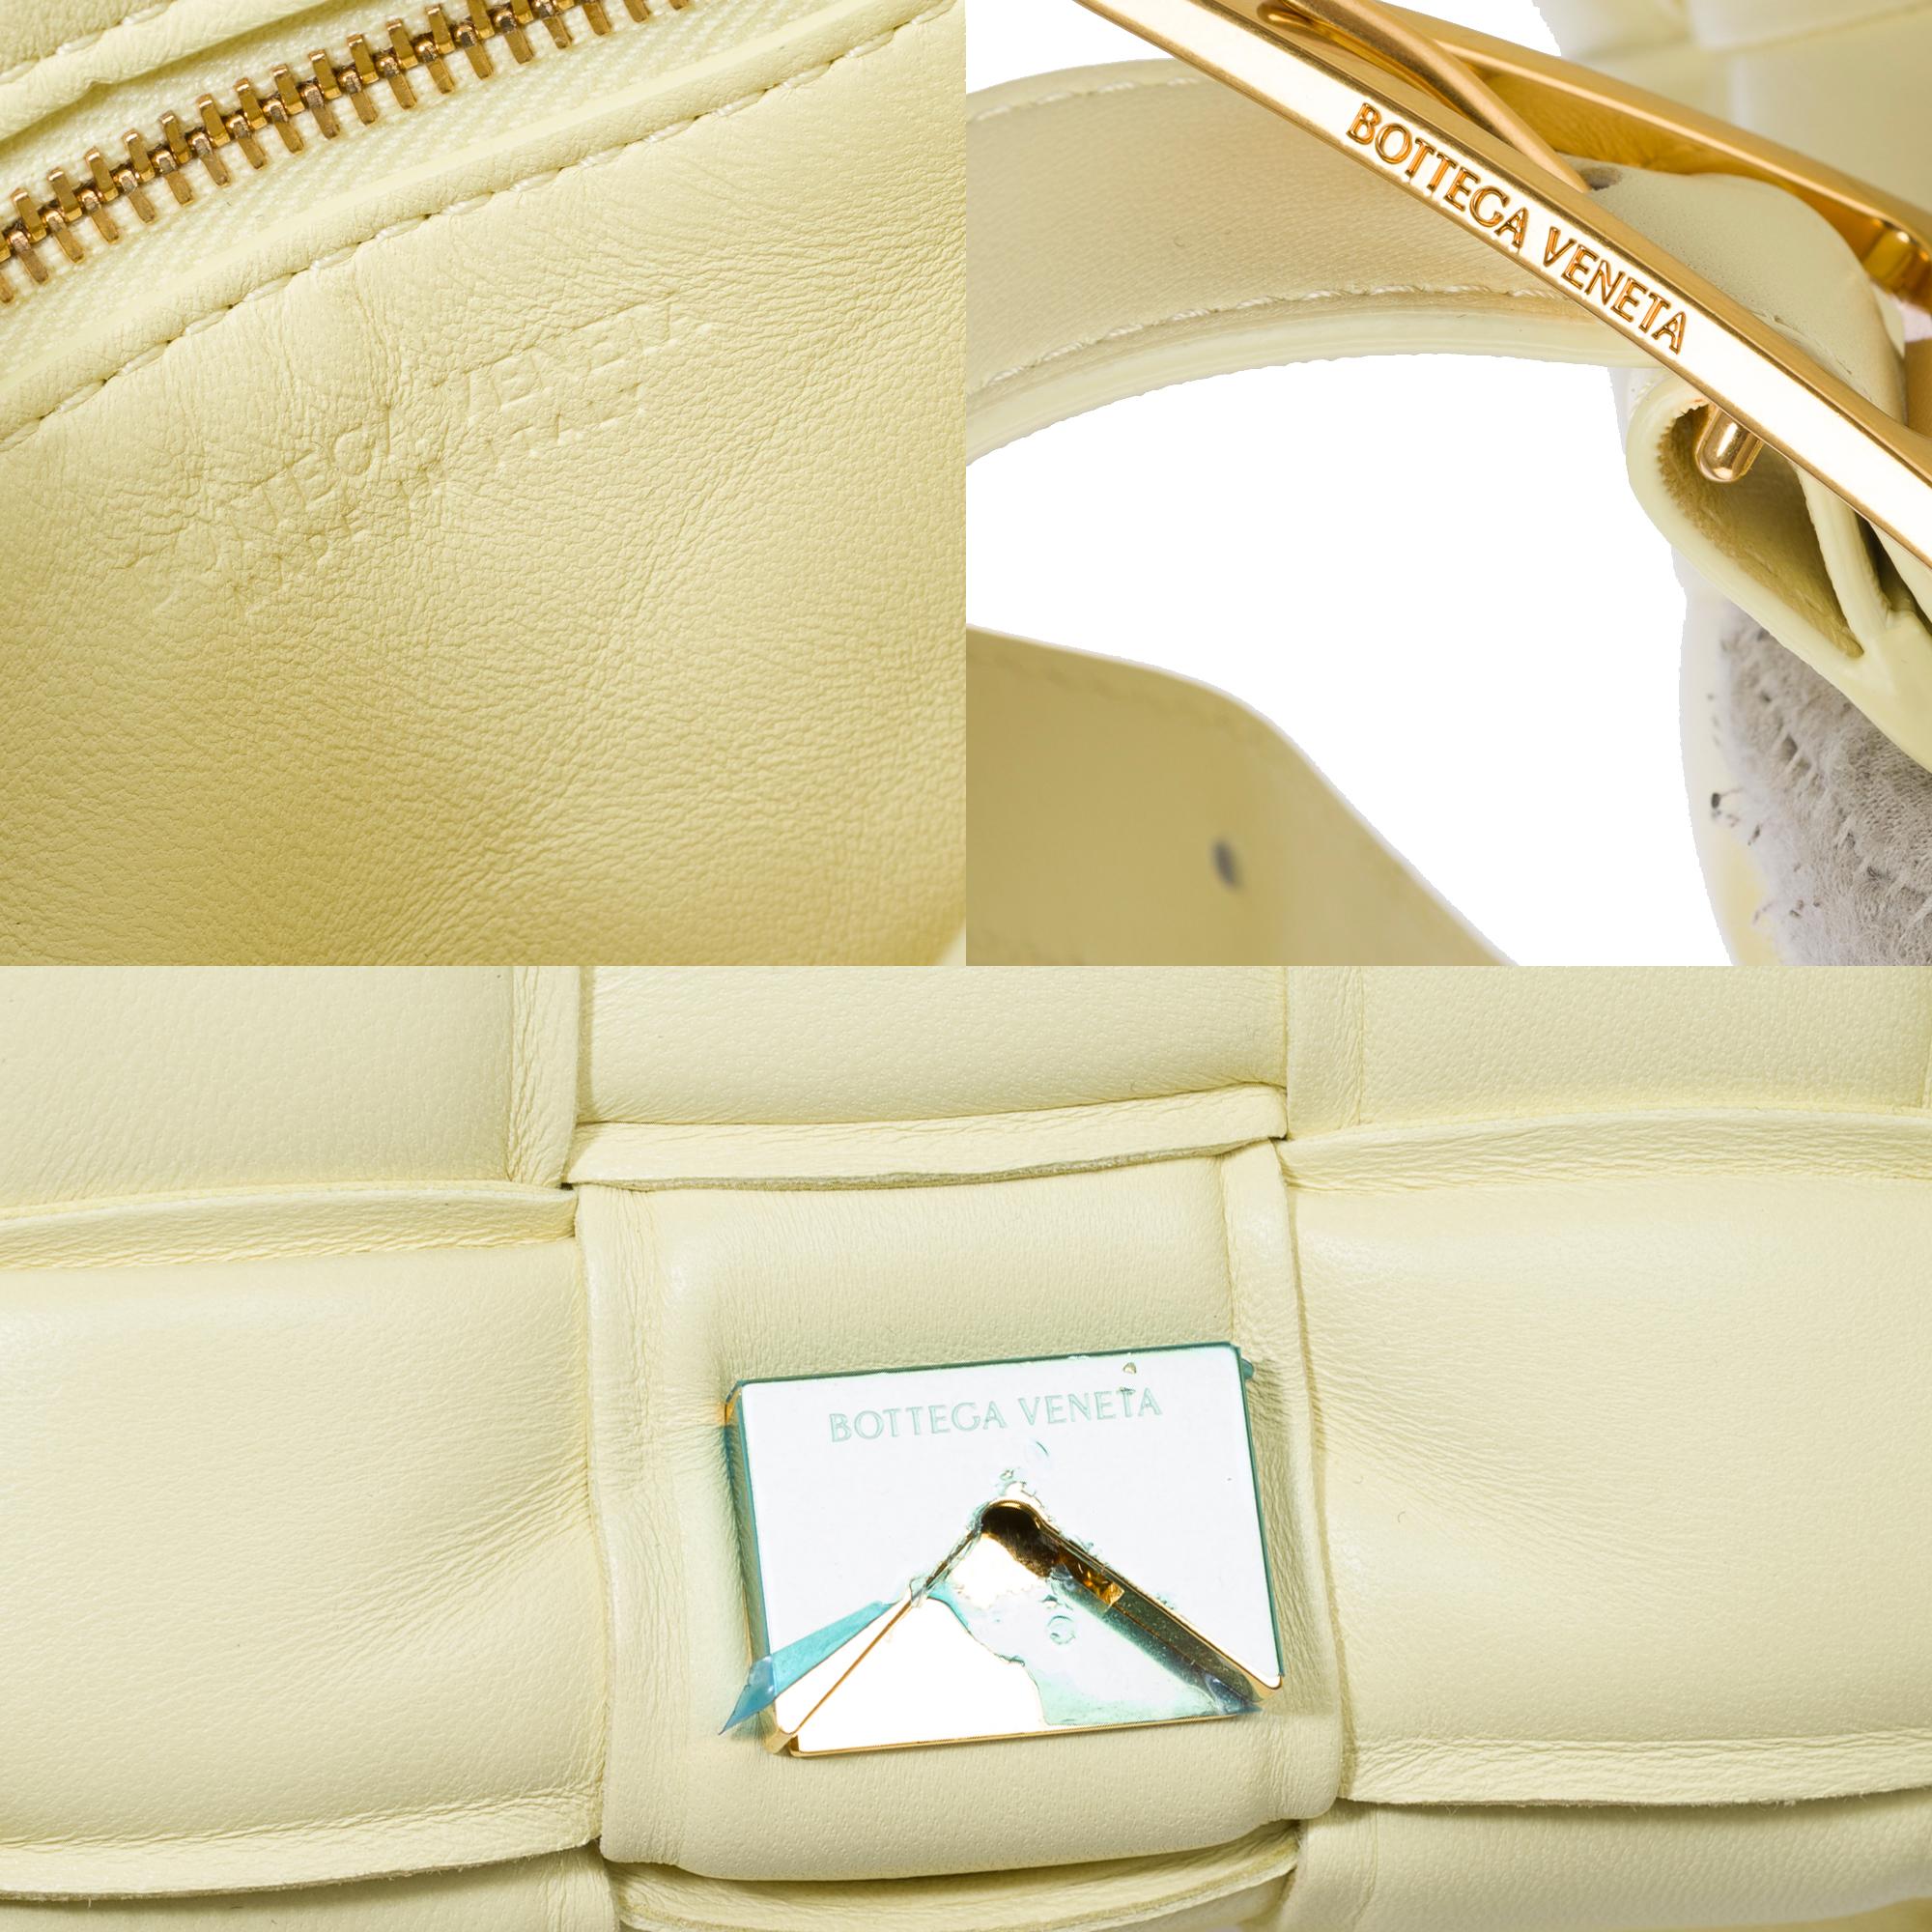 Bottega Veneta Cassette 19 shoulder bag in beige lambskin leather, GHW For Sale 3